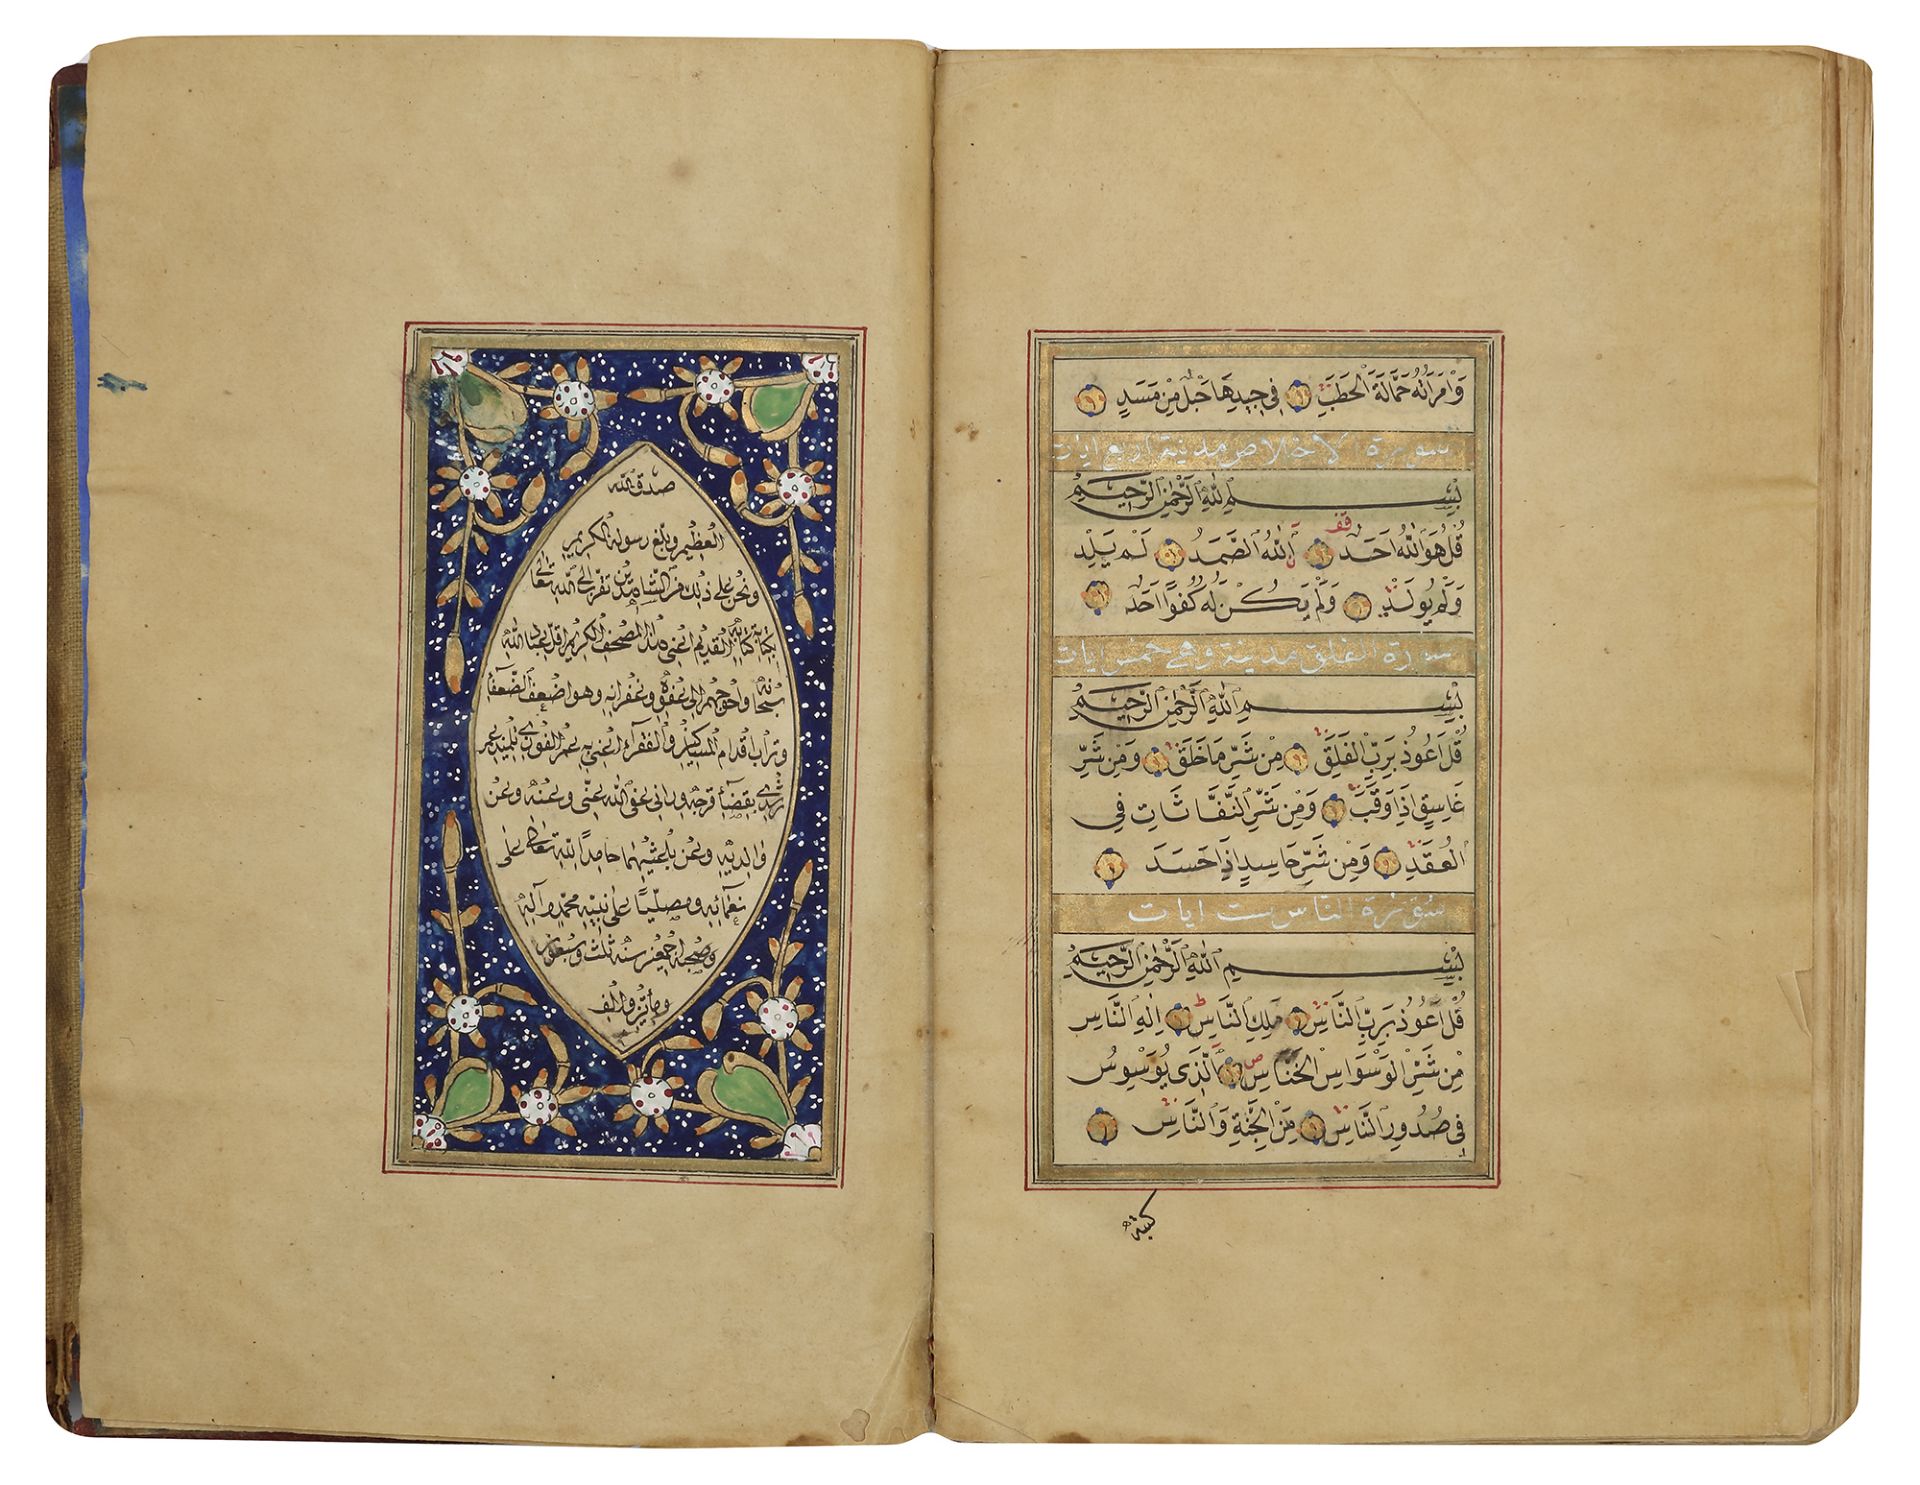 A FINE OTTOMAN QURAN, TURKEY, WRITTEN BY OMAR AL-FAWRABI STUDENT OF OMAR RUSHDI, DATED 1273 AH/1856 - Image 5 of 6